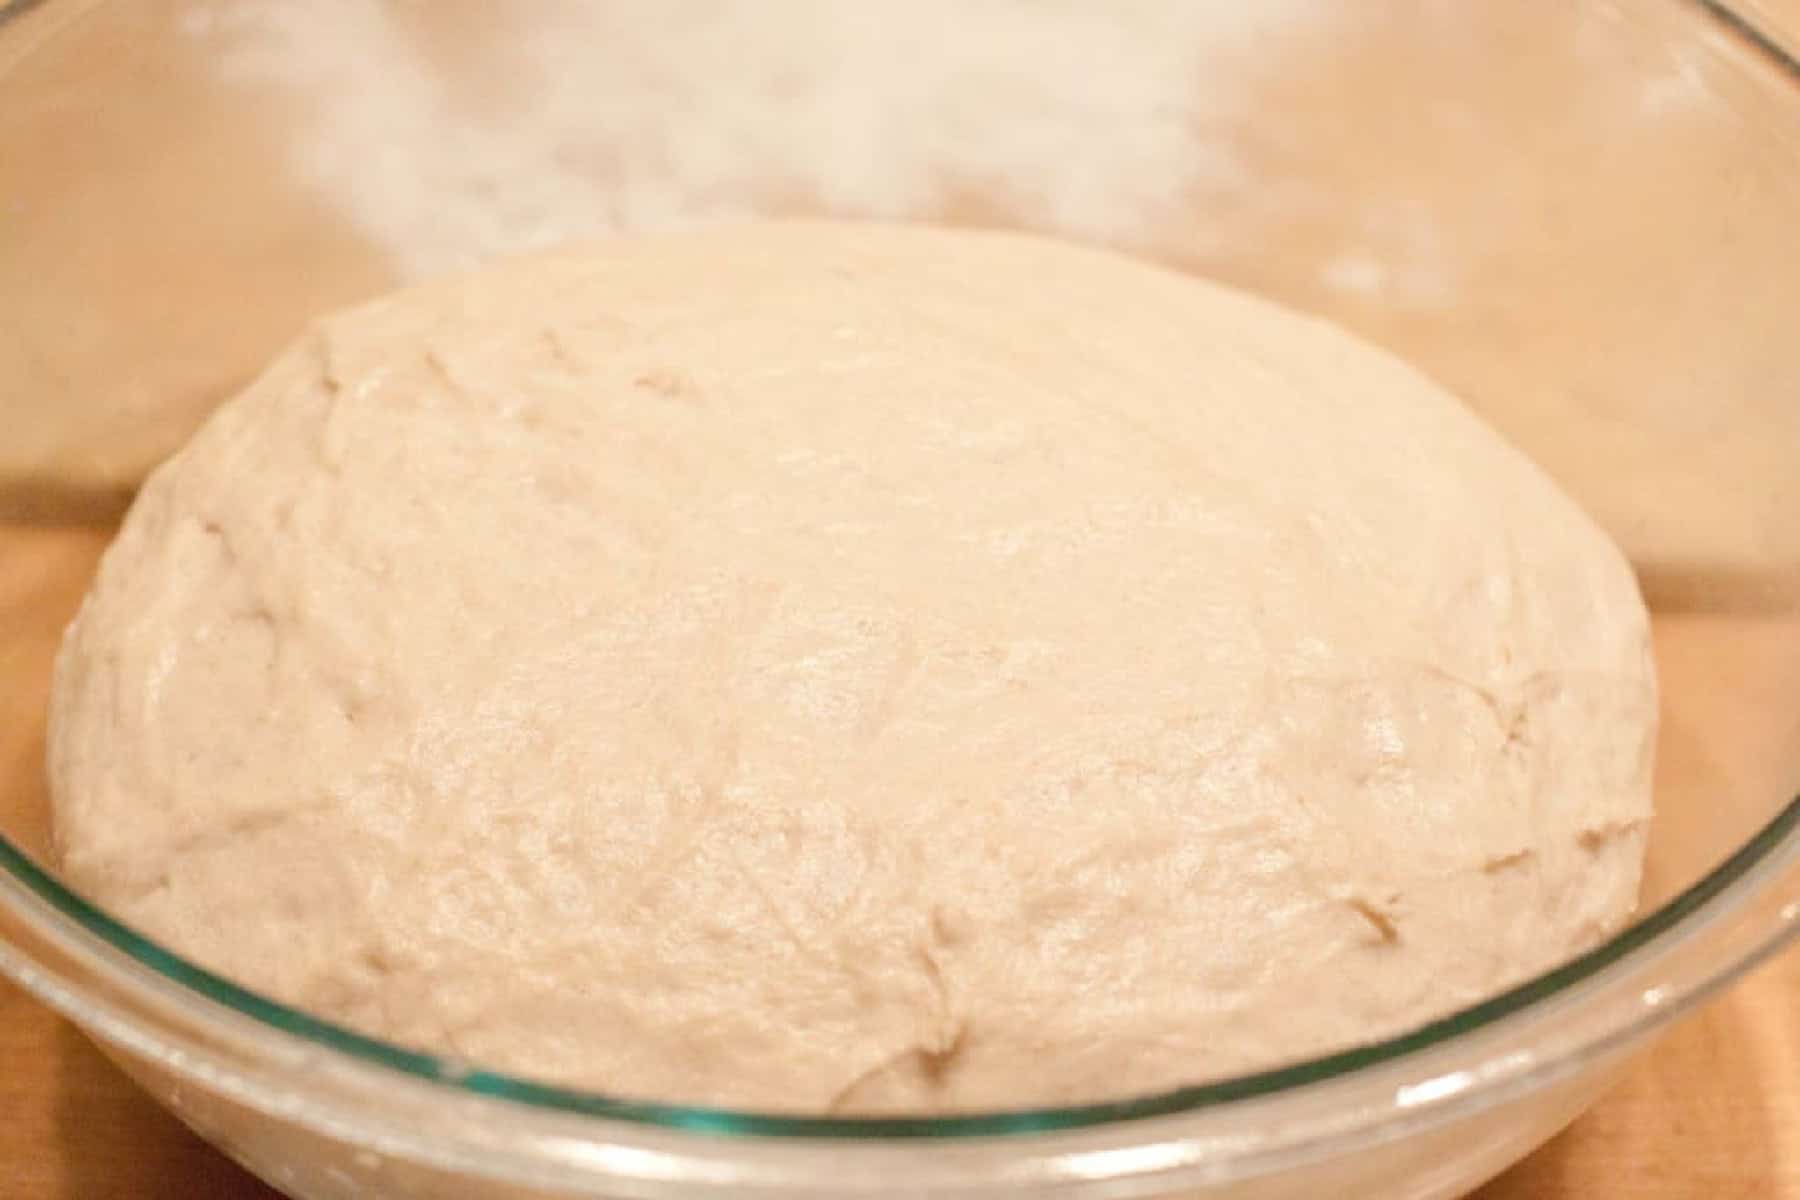 a risen dough in a bowl.